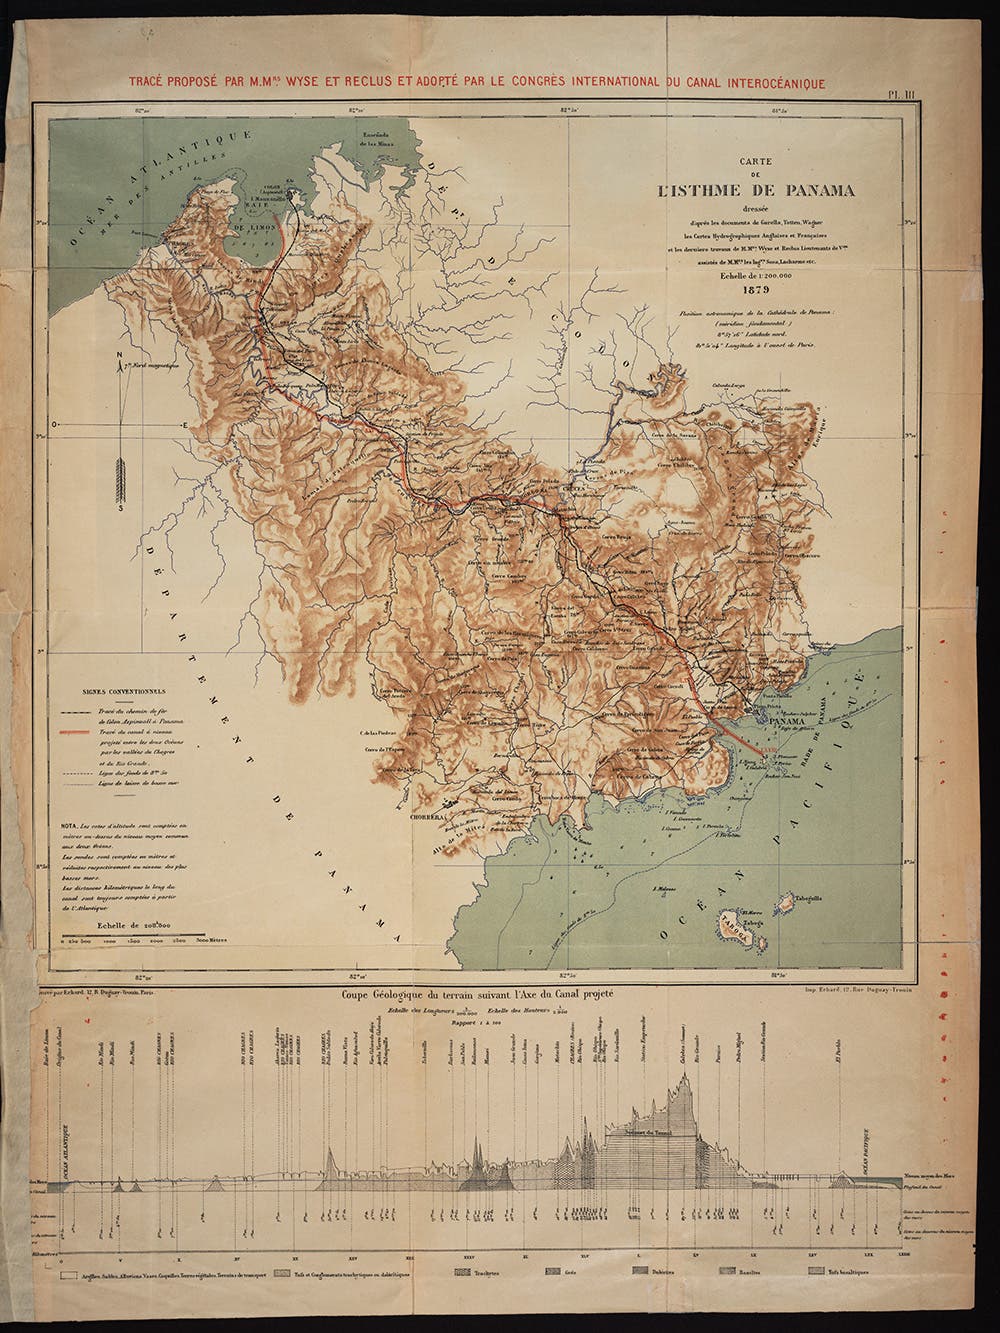 Map of the proposed route for a sea-level canal, 1879. From Congrès international d’ètudes du canal interocéanique, Paris, 1879.